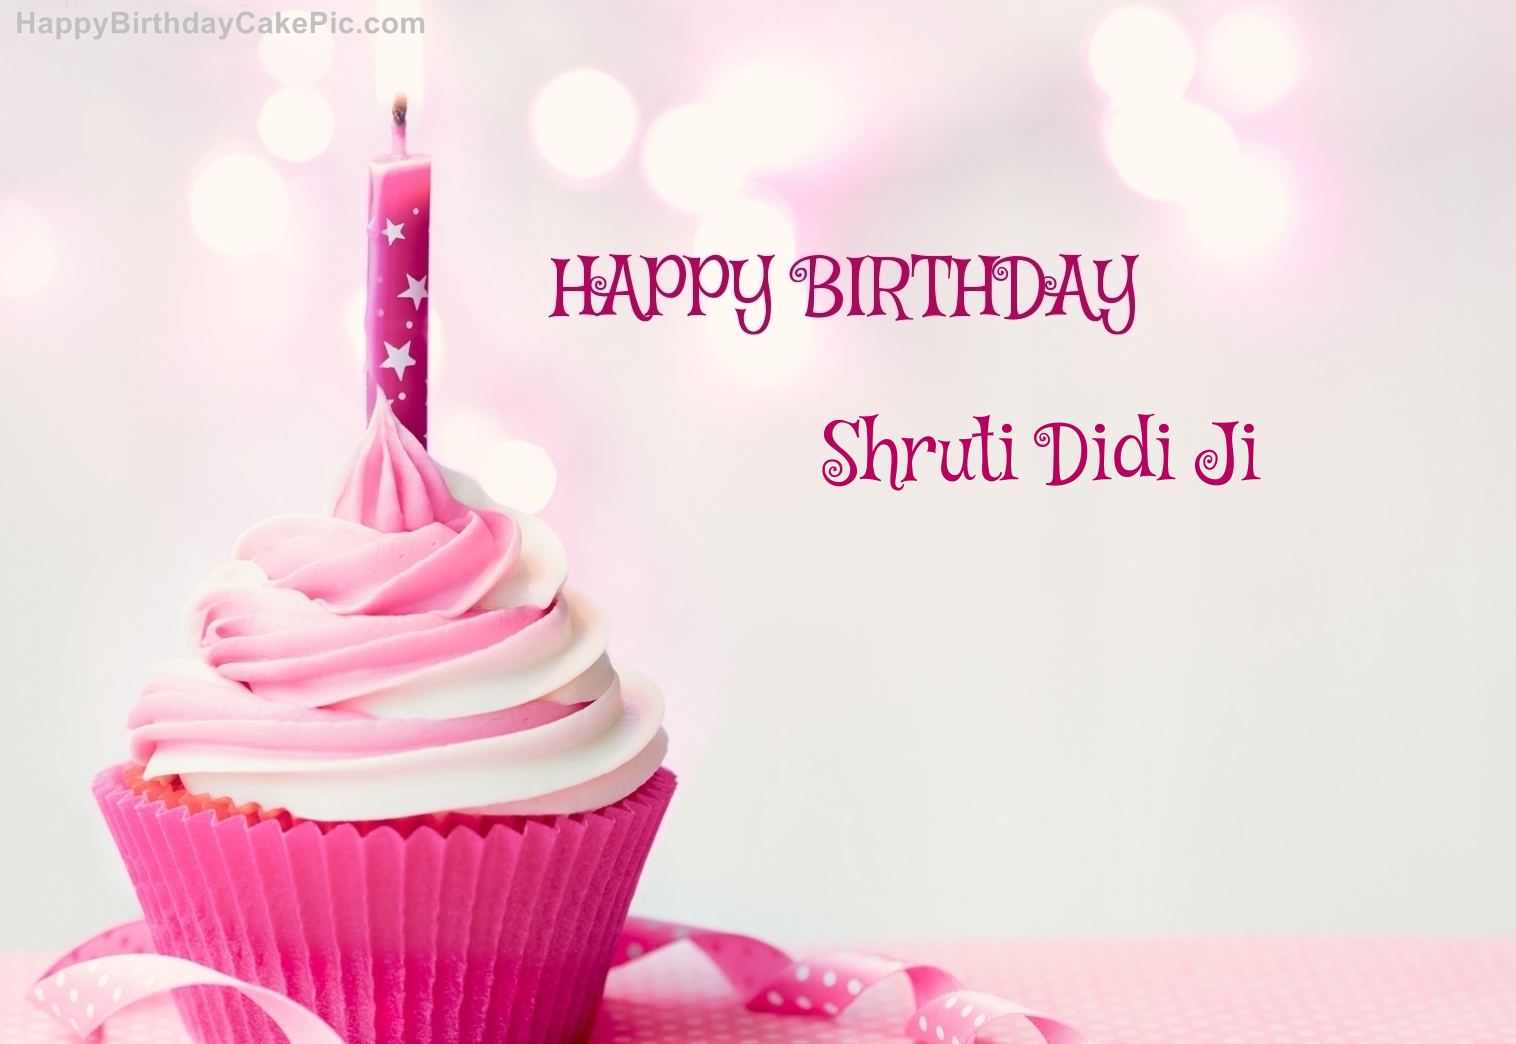 ️ Happy Birthday Cupcake Candle Pink Cake For Shruti Didi Ji